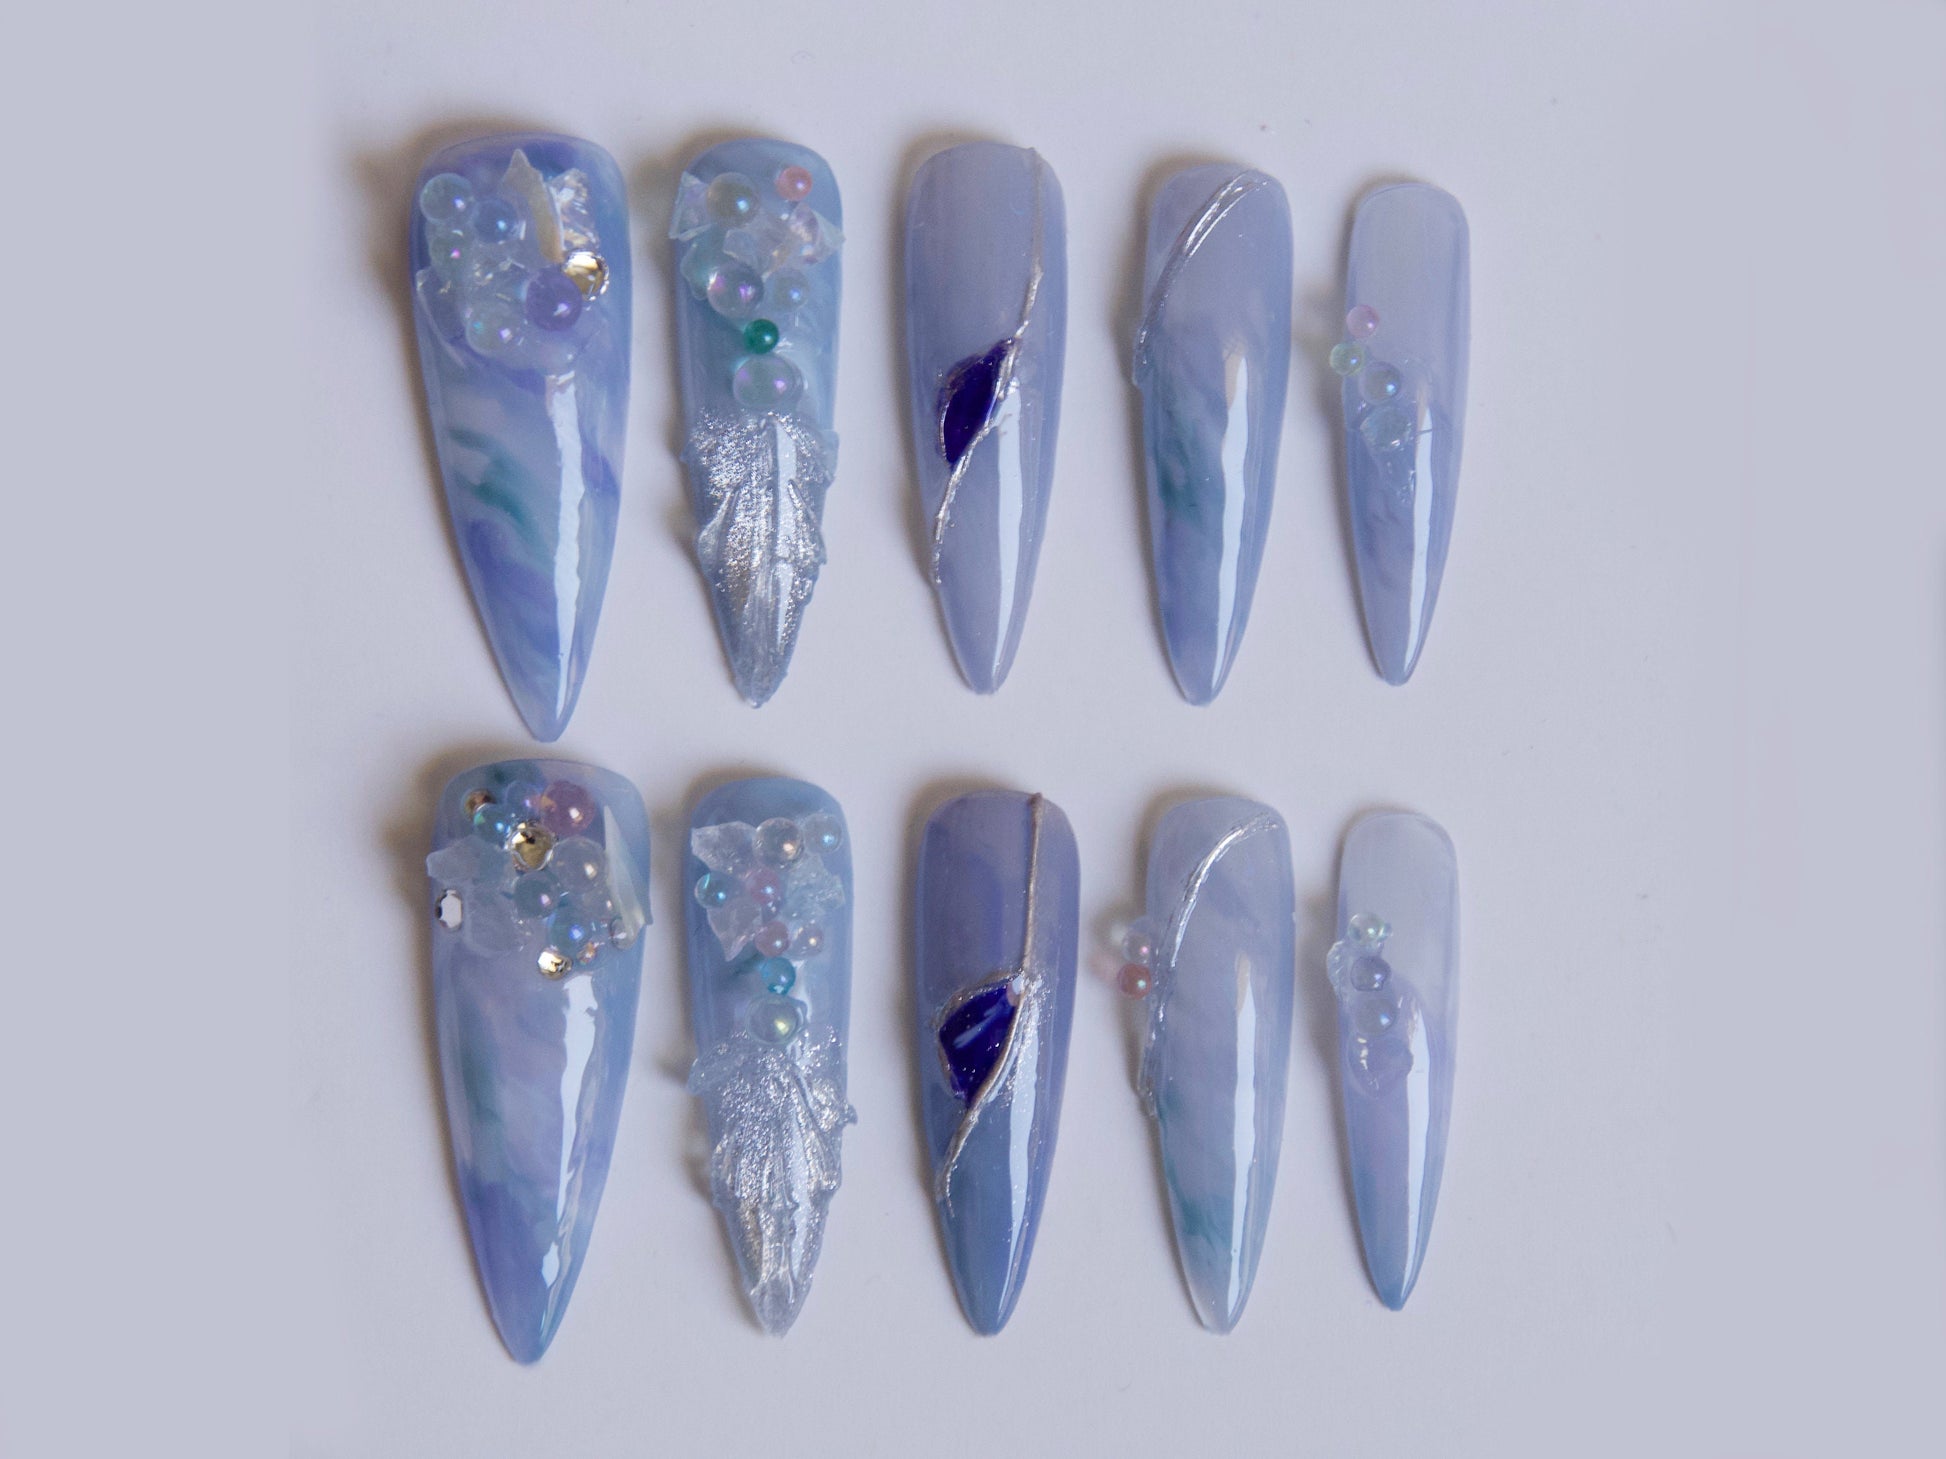 10g Broken Glass Irregular Stones for nail art/ Iridescent Clear Rocks